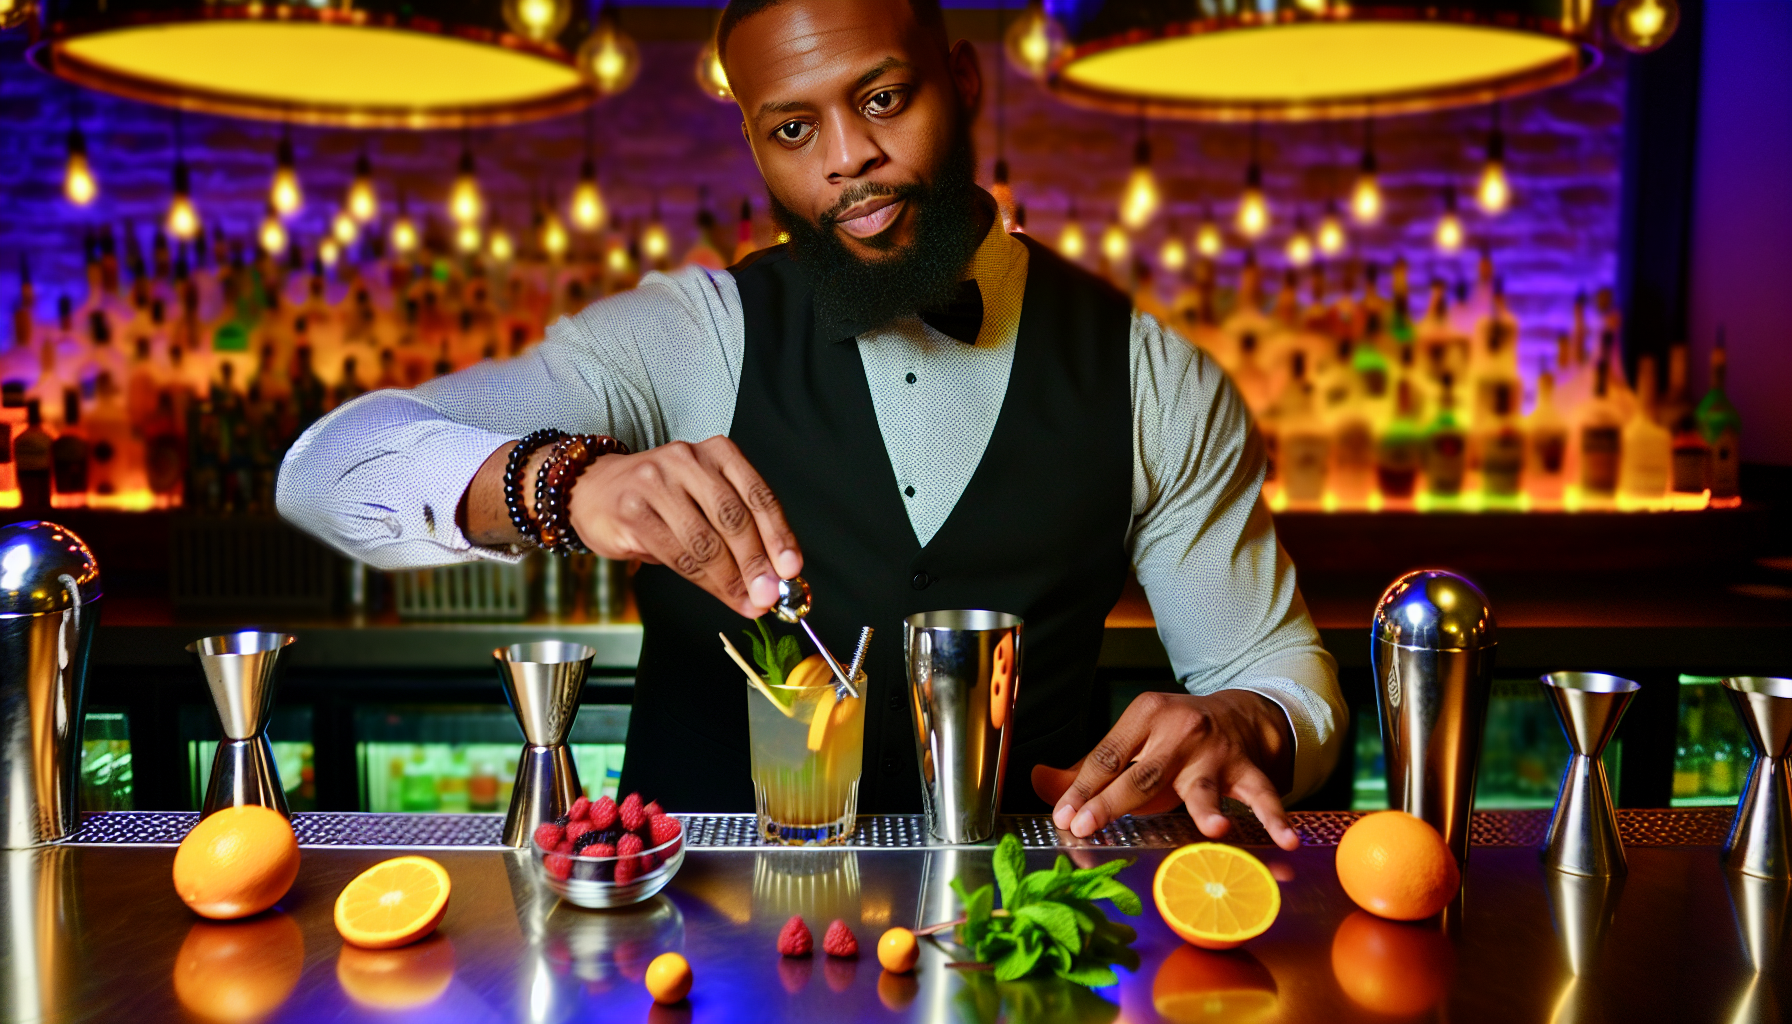 Mixologist preparing a creative cocktail at a bar